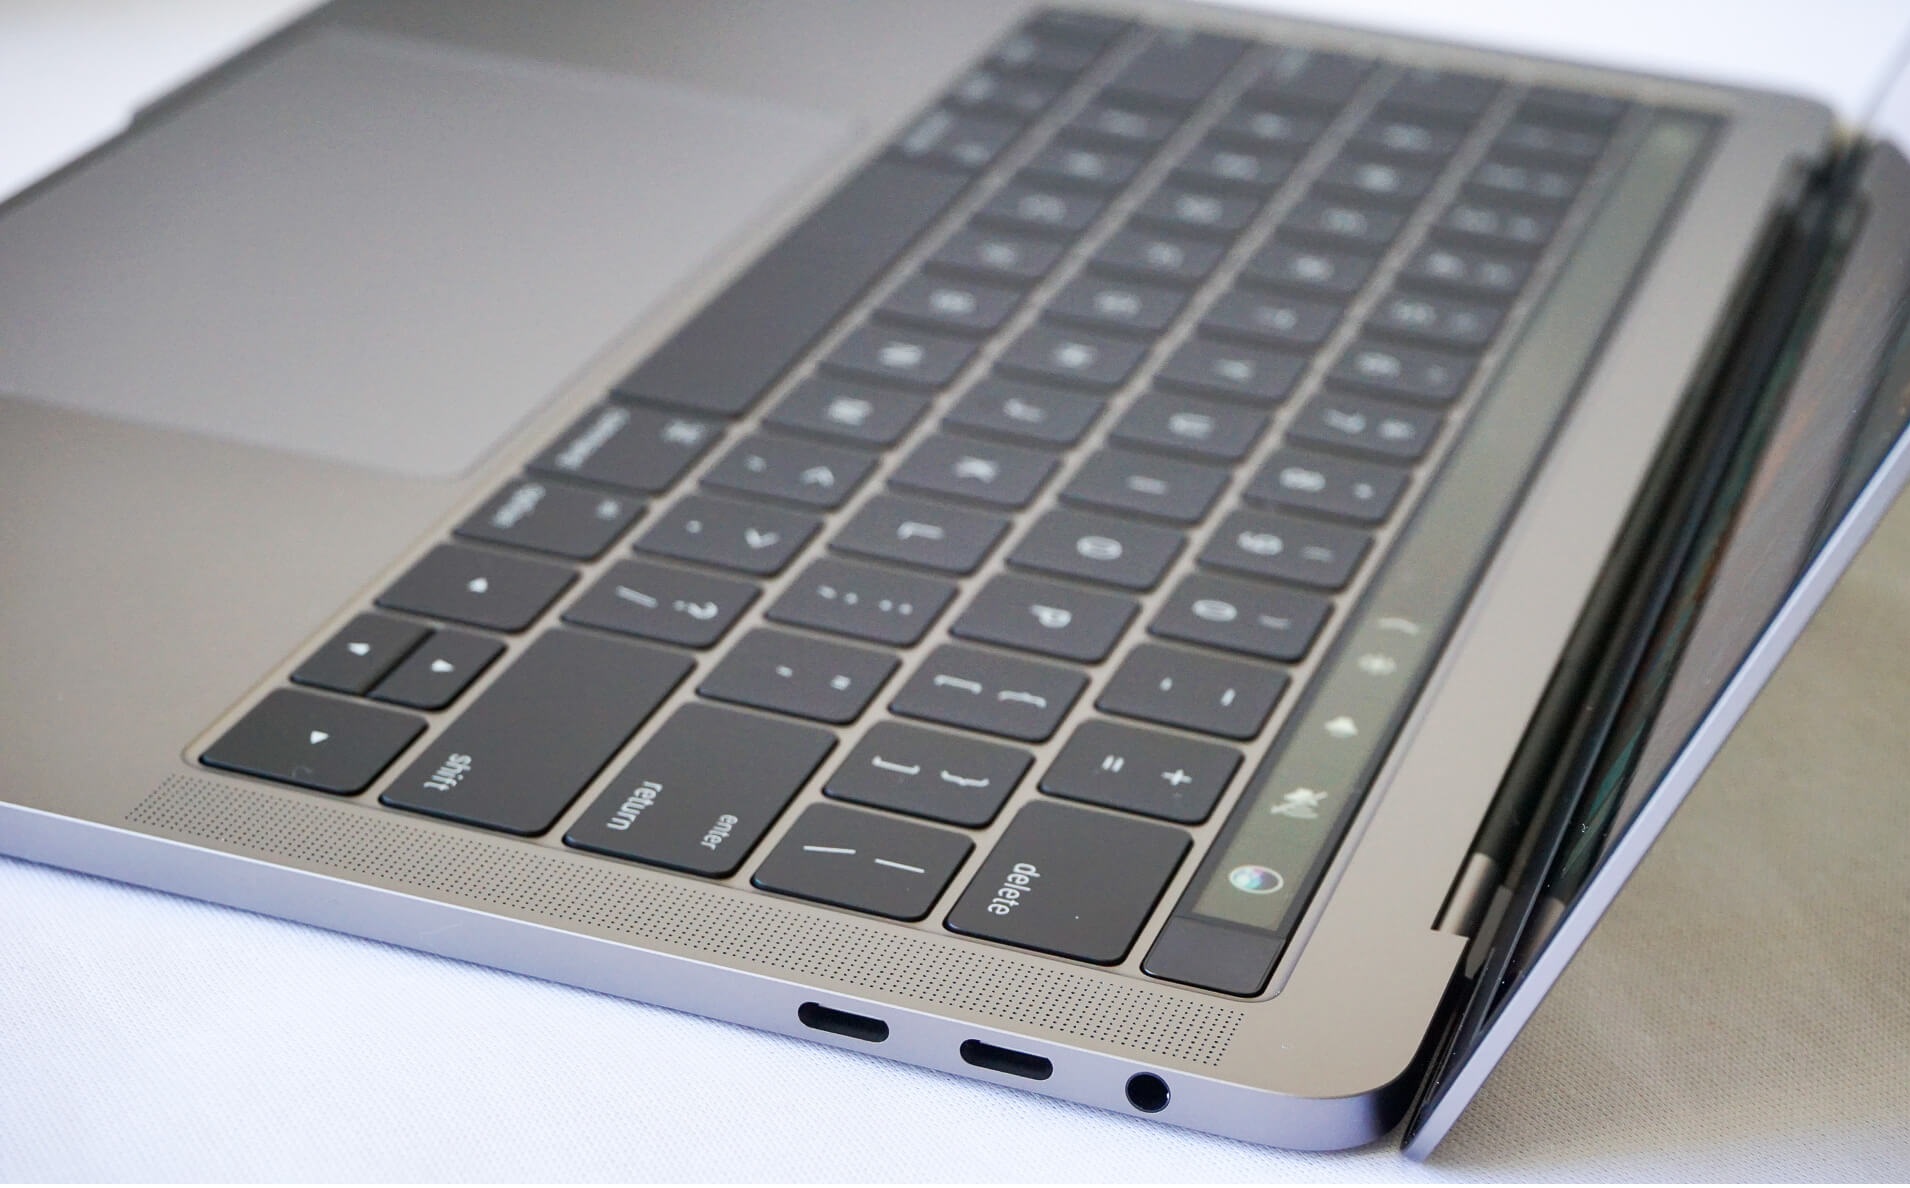 Apple MacBook Pro 13 Space Grey 2018 (MR9Q2)